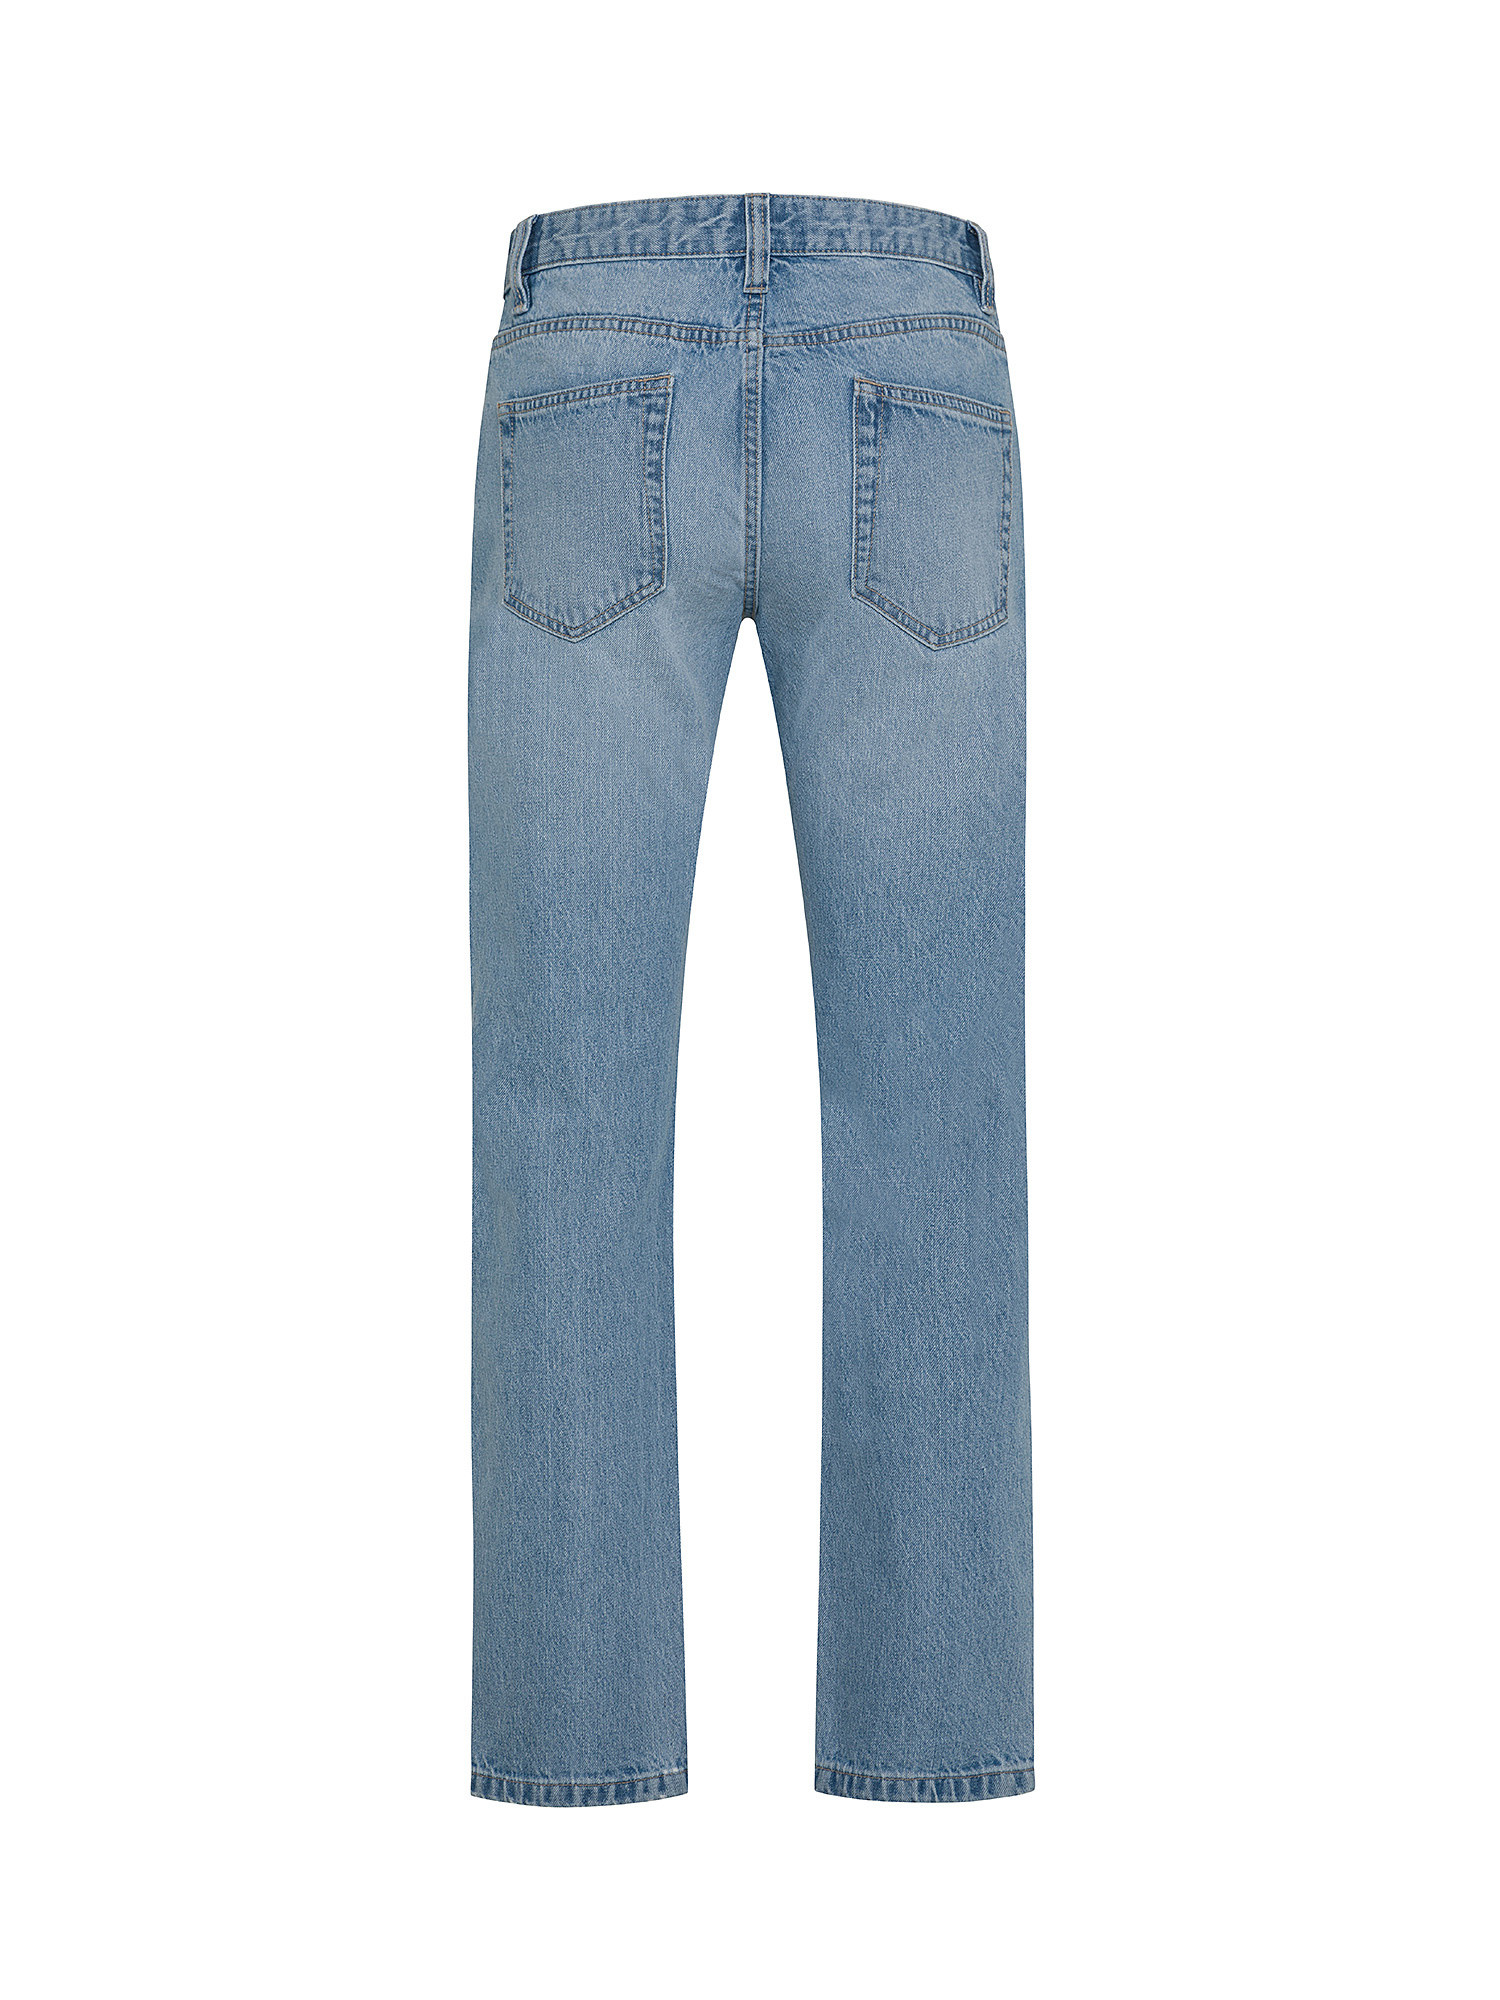 JCT - Jeans cinque tasche in puro cotone, Denim, large image number 1